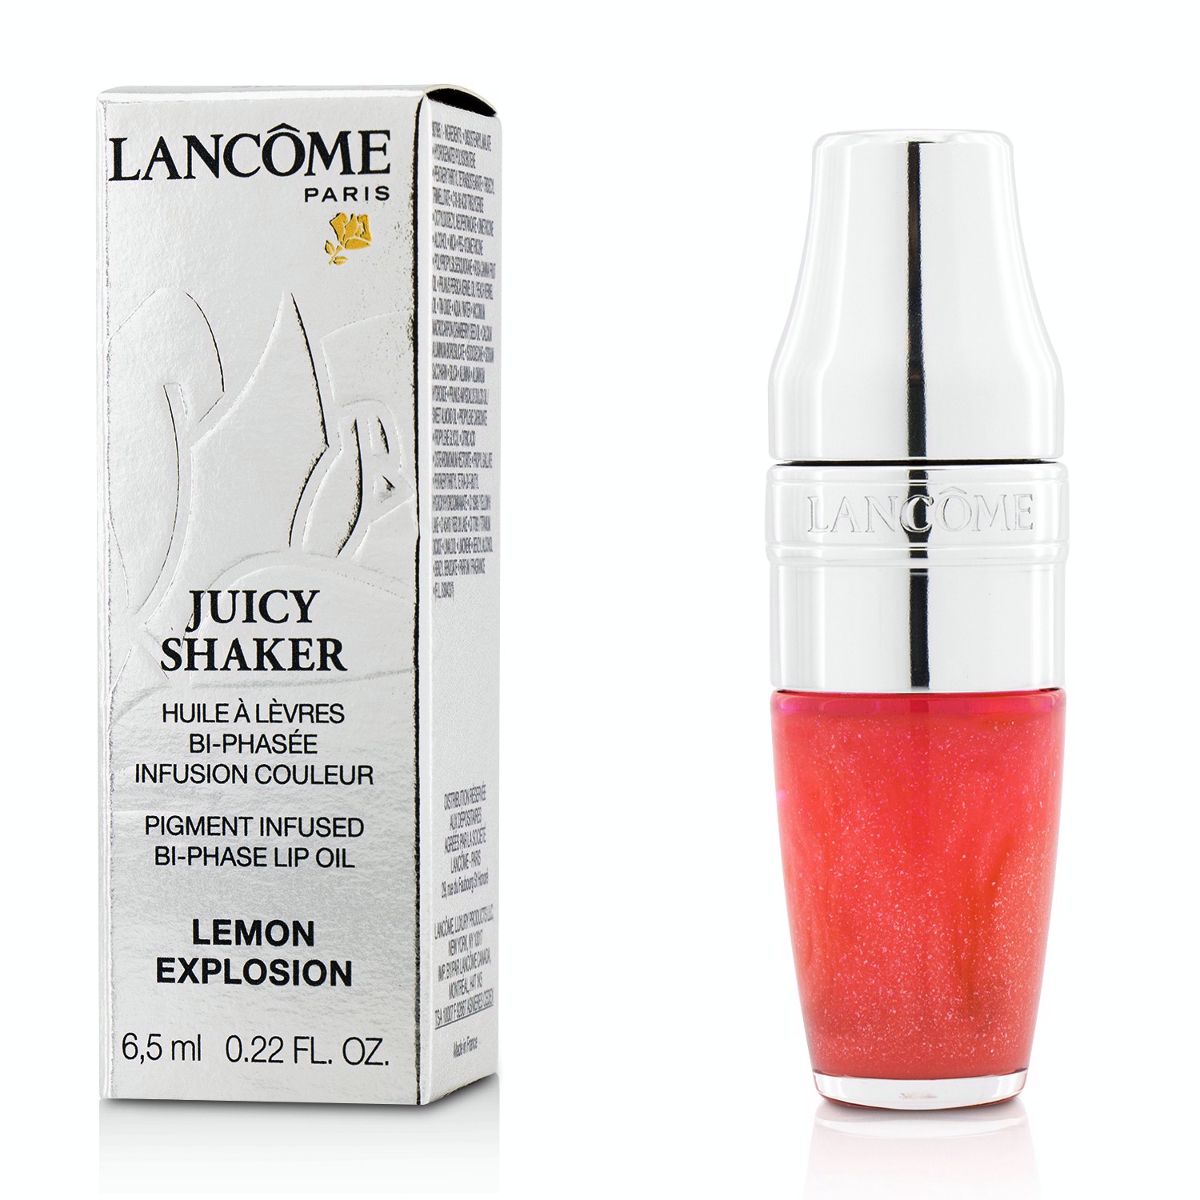 Juicy Shaker Pigment Infused Bi Phase Lip Oil - #300 Lemon Explosion Lancome Image